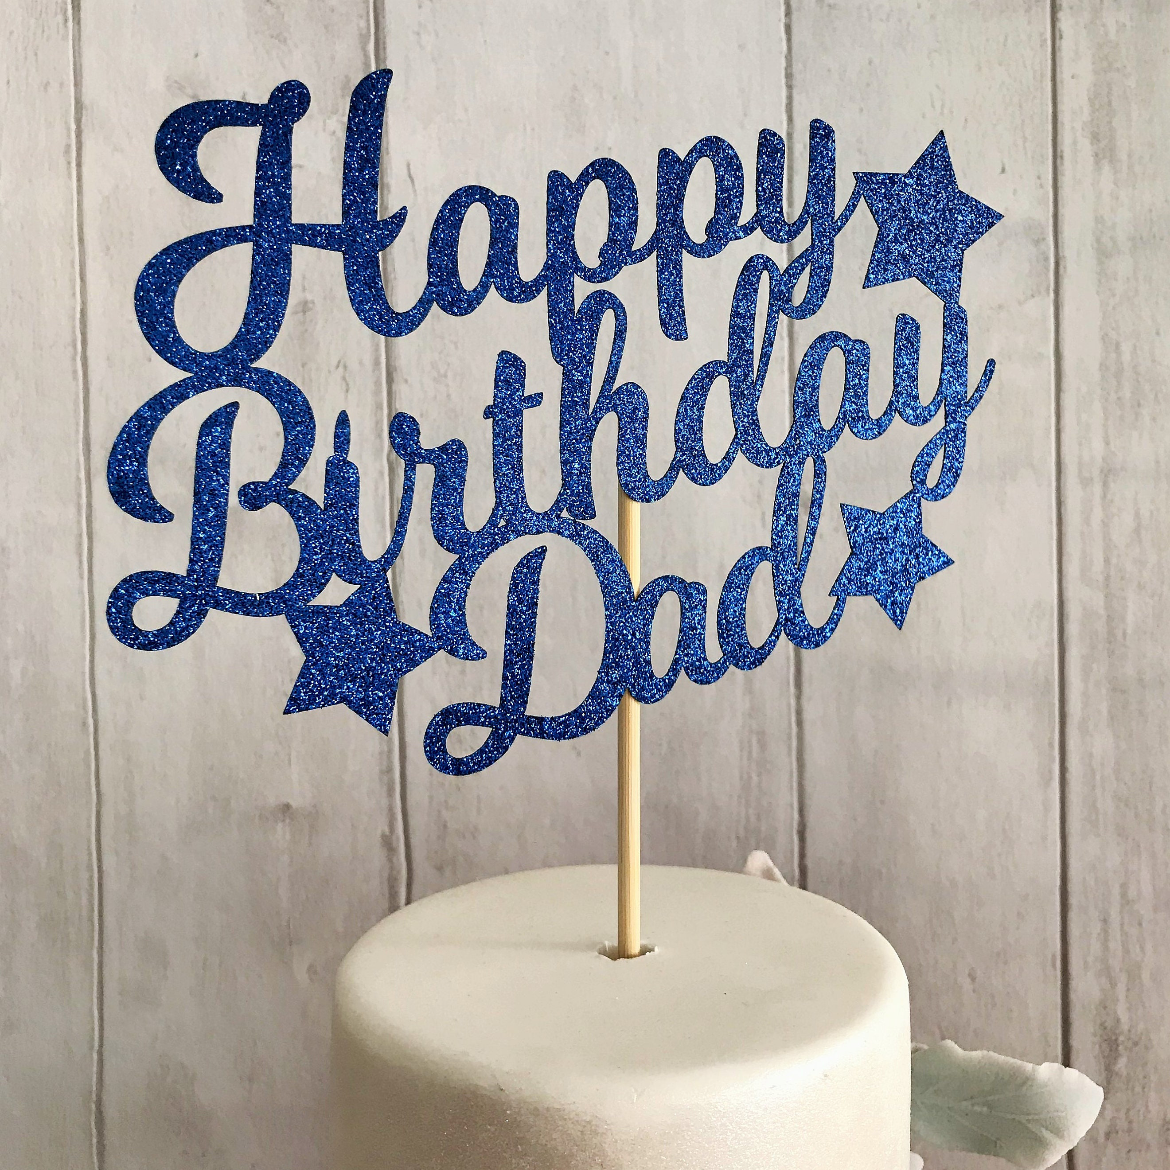 Happy Birthday Dad Glitter Card Topper